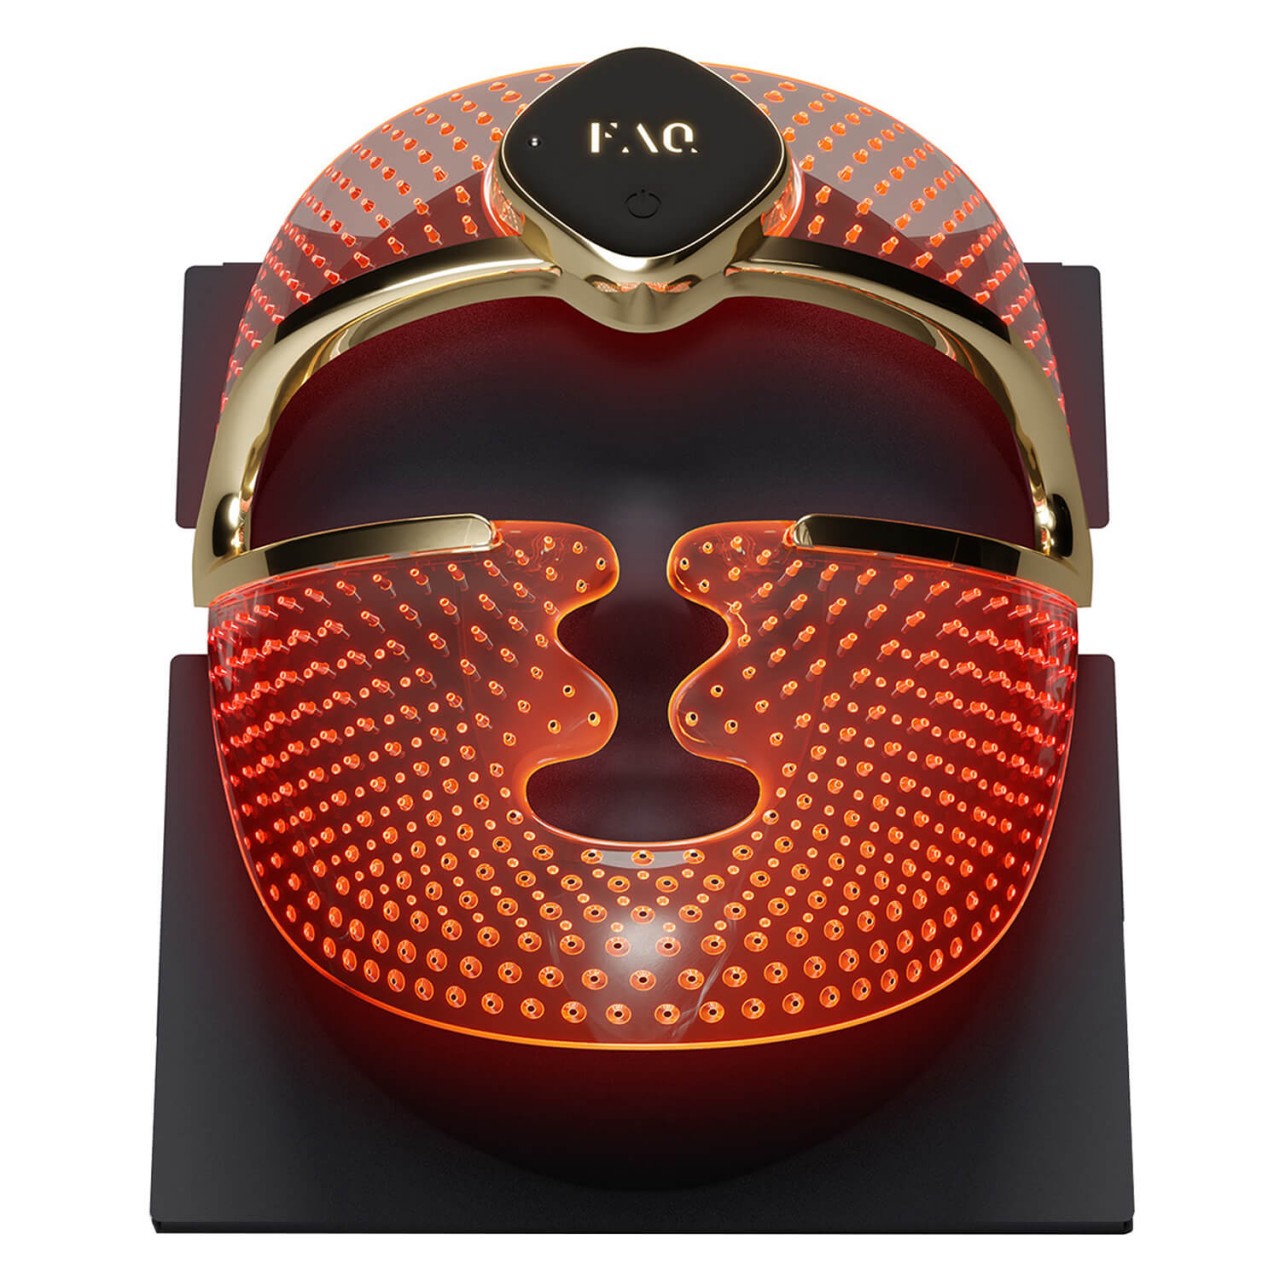 FAQ™ - 202 Smart Silicone LED Face Mask von Foreo